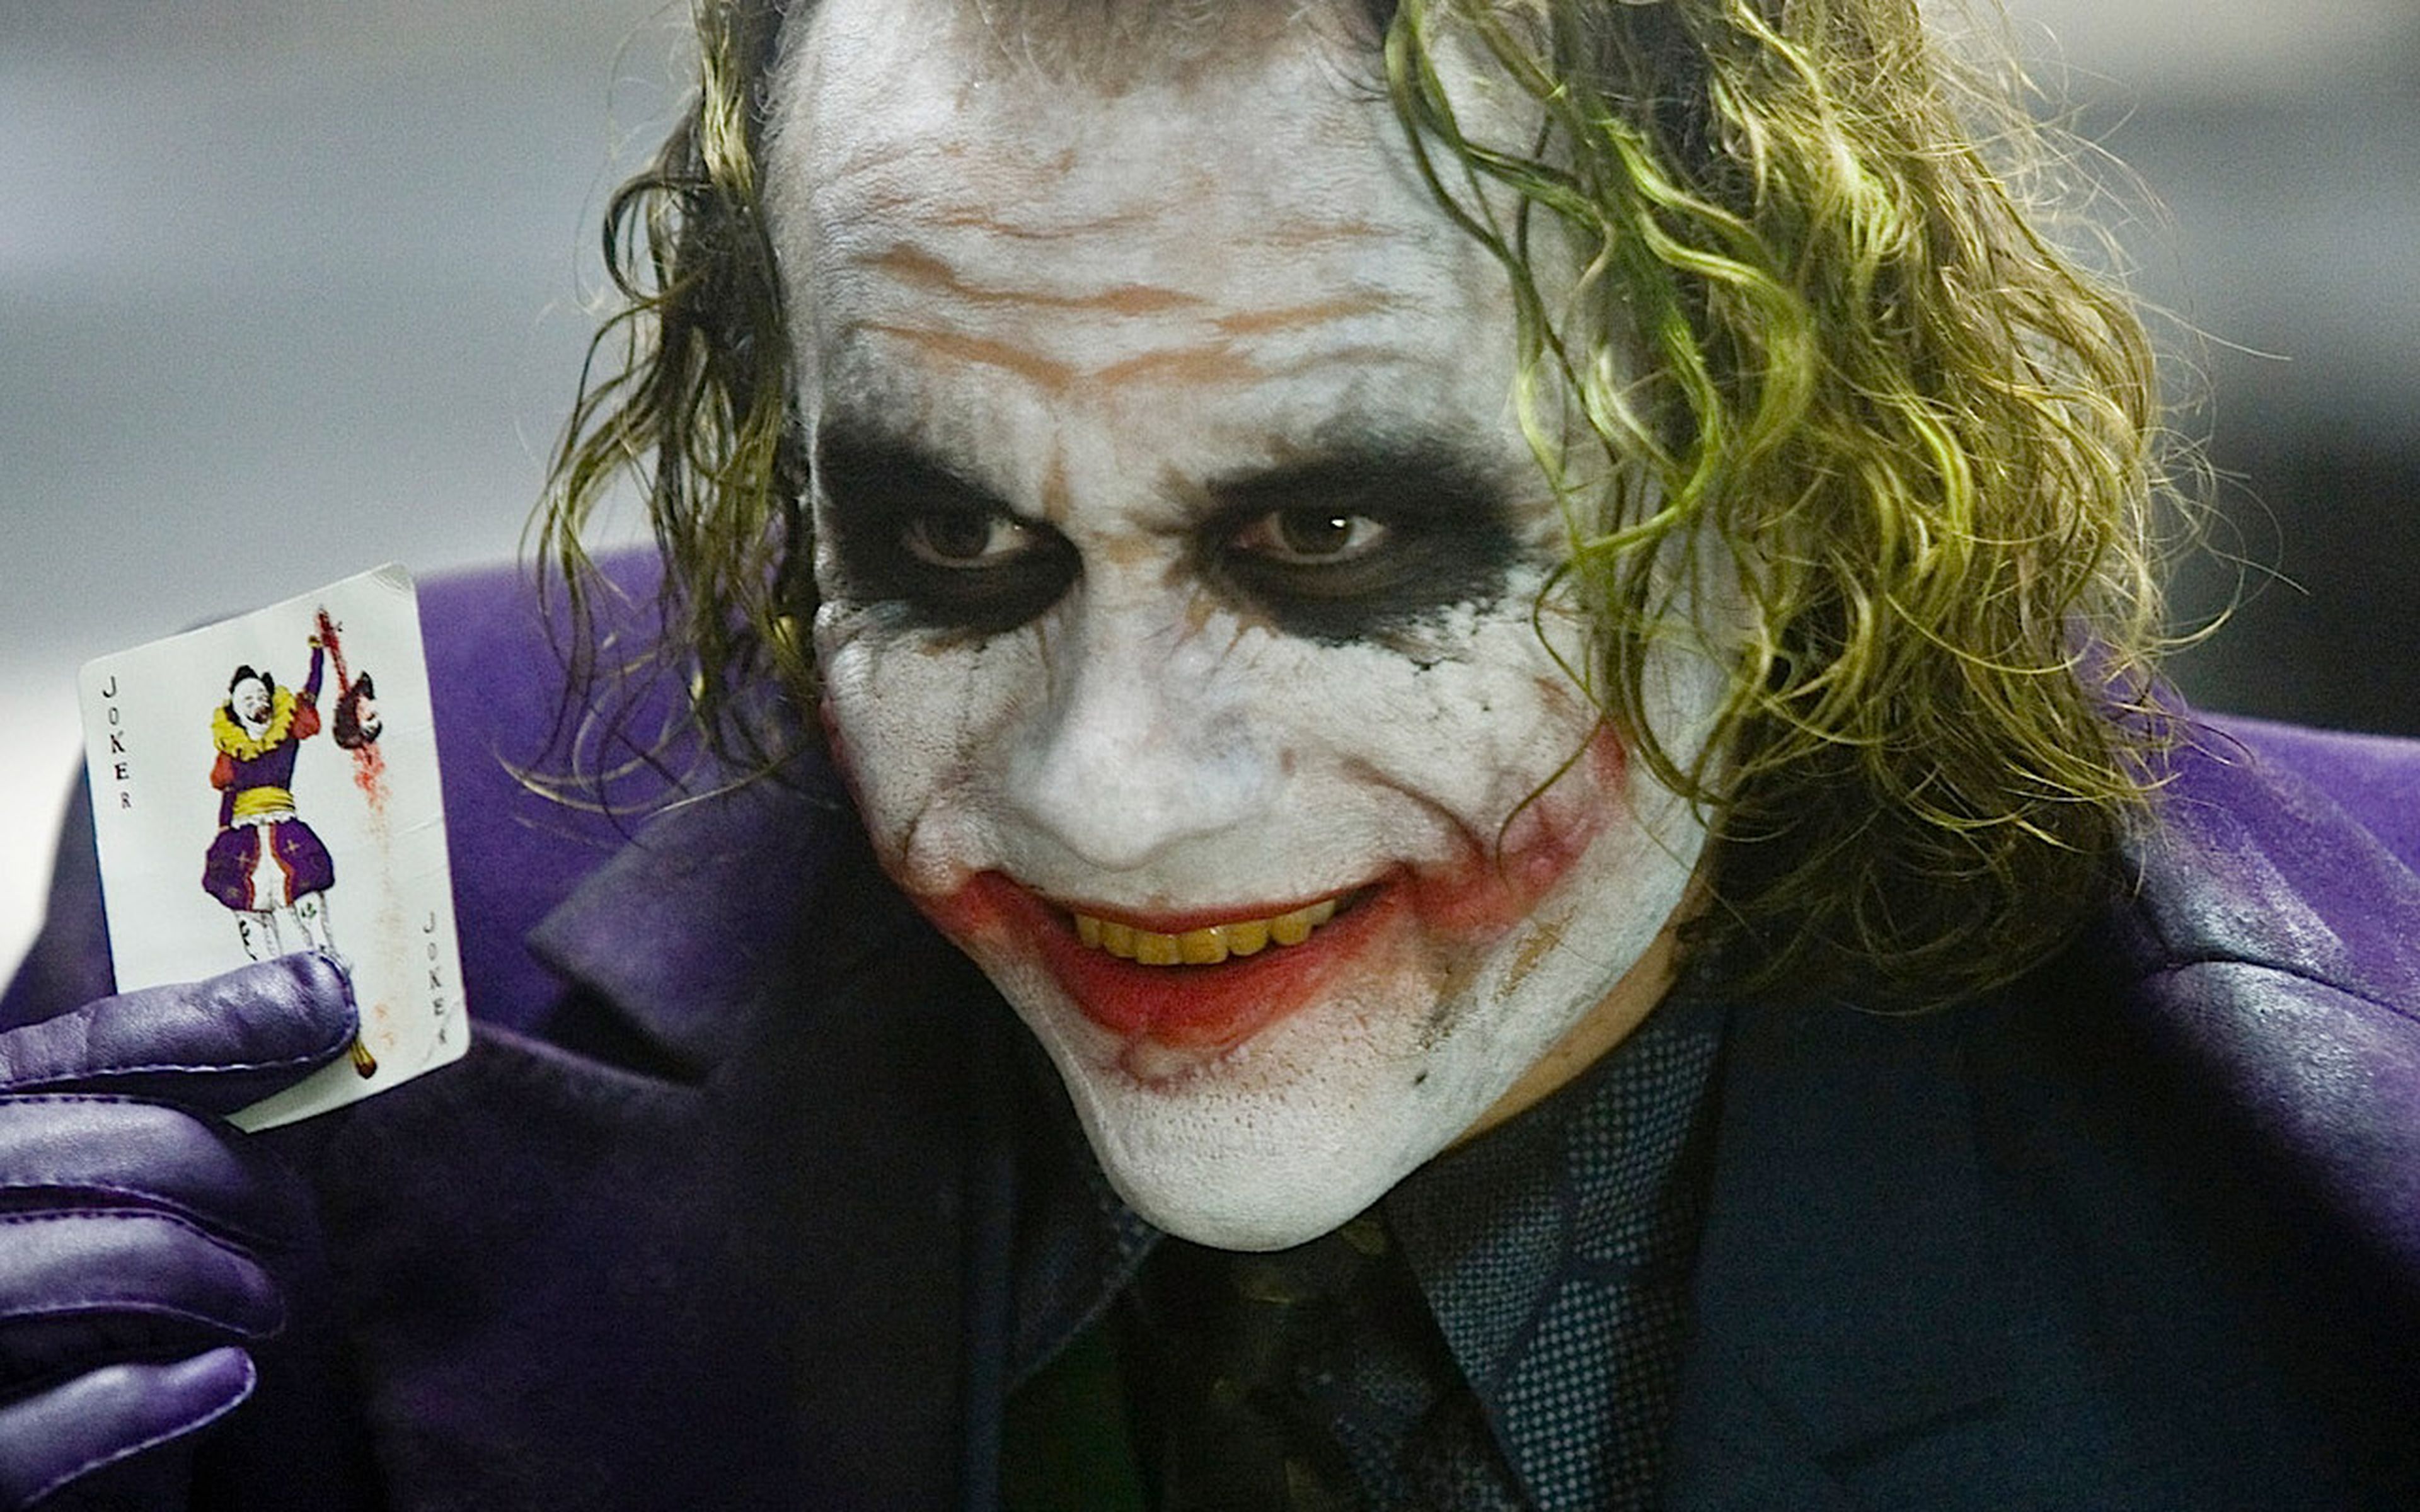 El Caballero Oscuro: ¿Es el Joker de Ledger un héroe incomprendido?